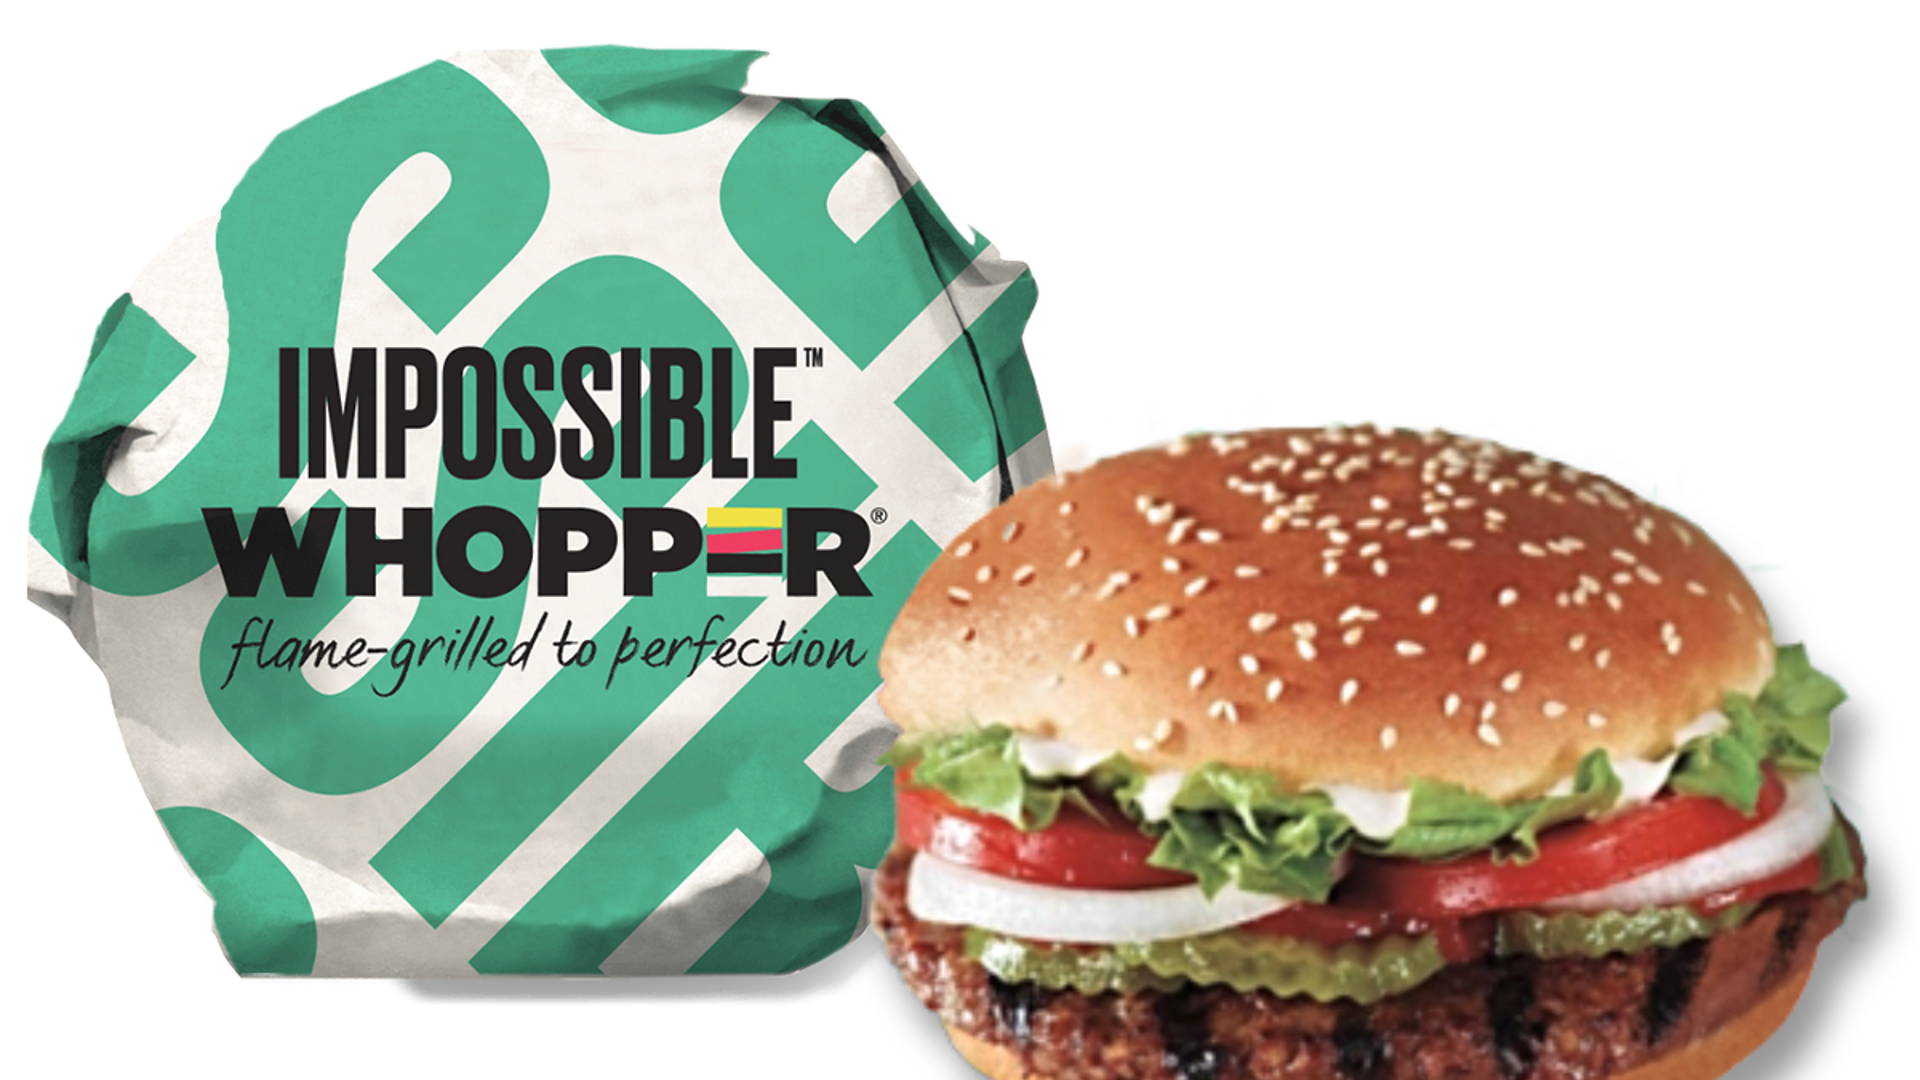 Impossible whopper burger burger king